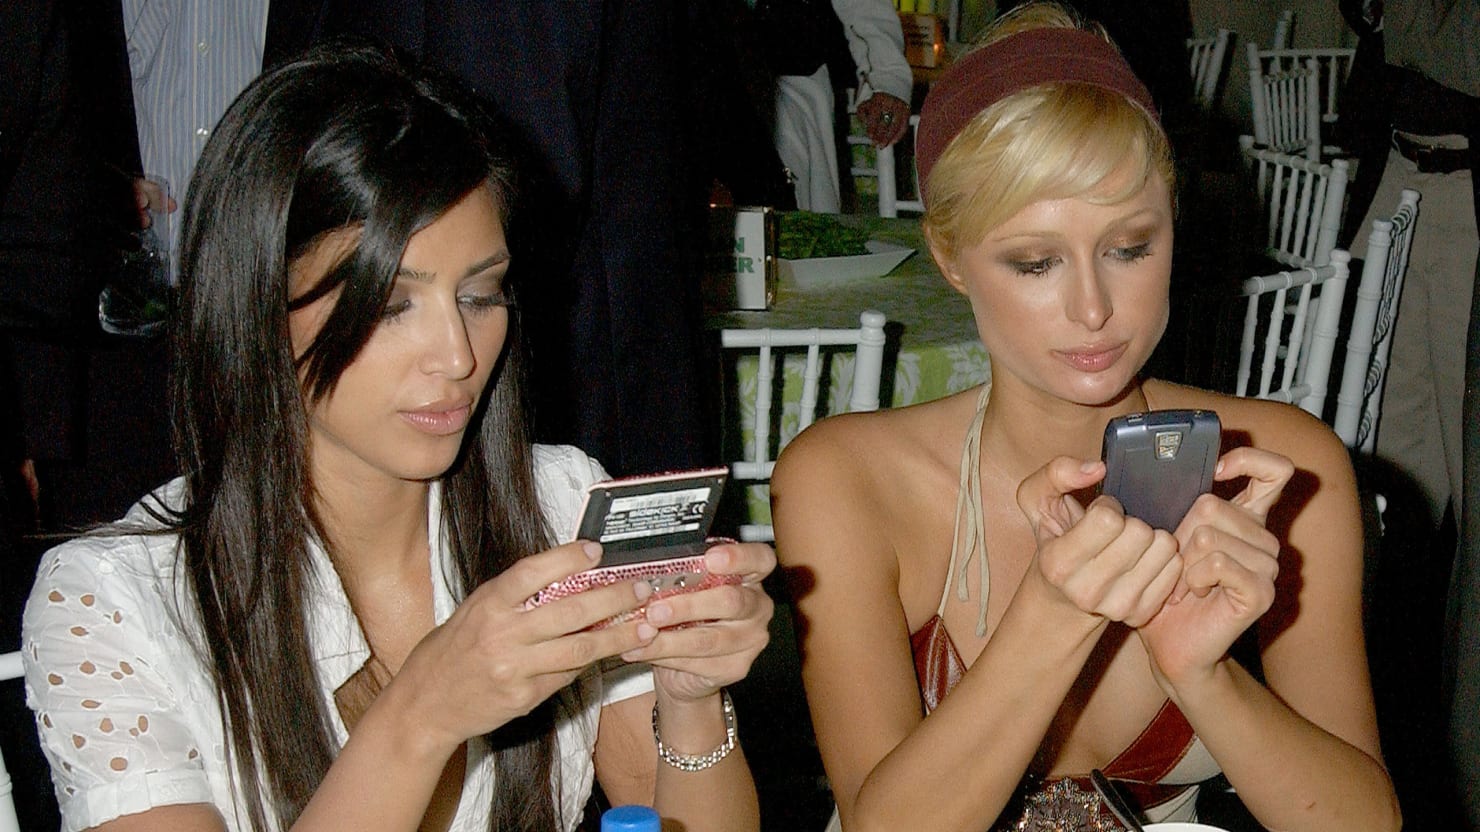 Kim Kardashian and Paris Hilton  Please Indulge Us by Looking at